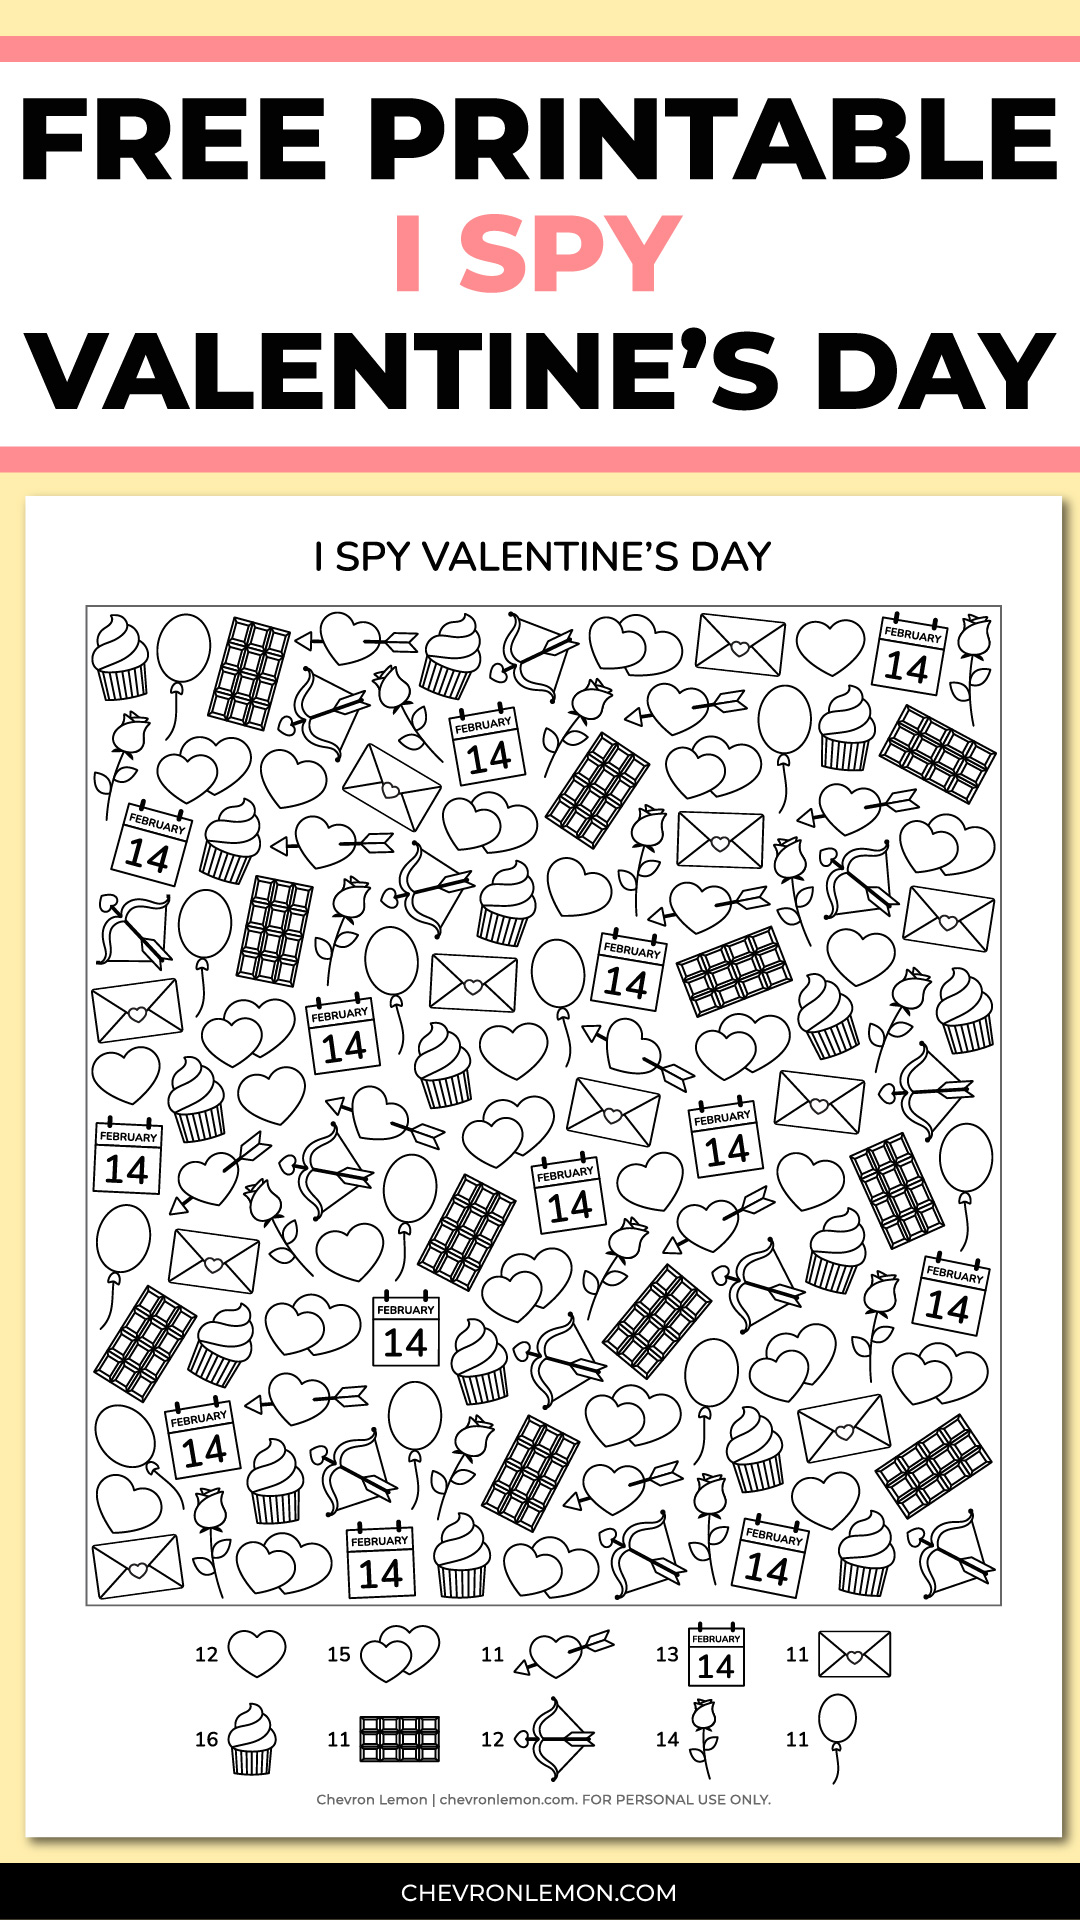 Free printable I spy Valentine's Day